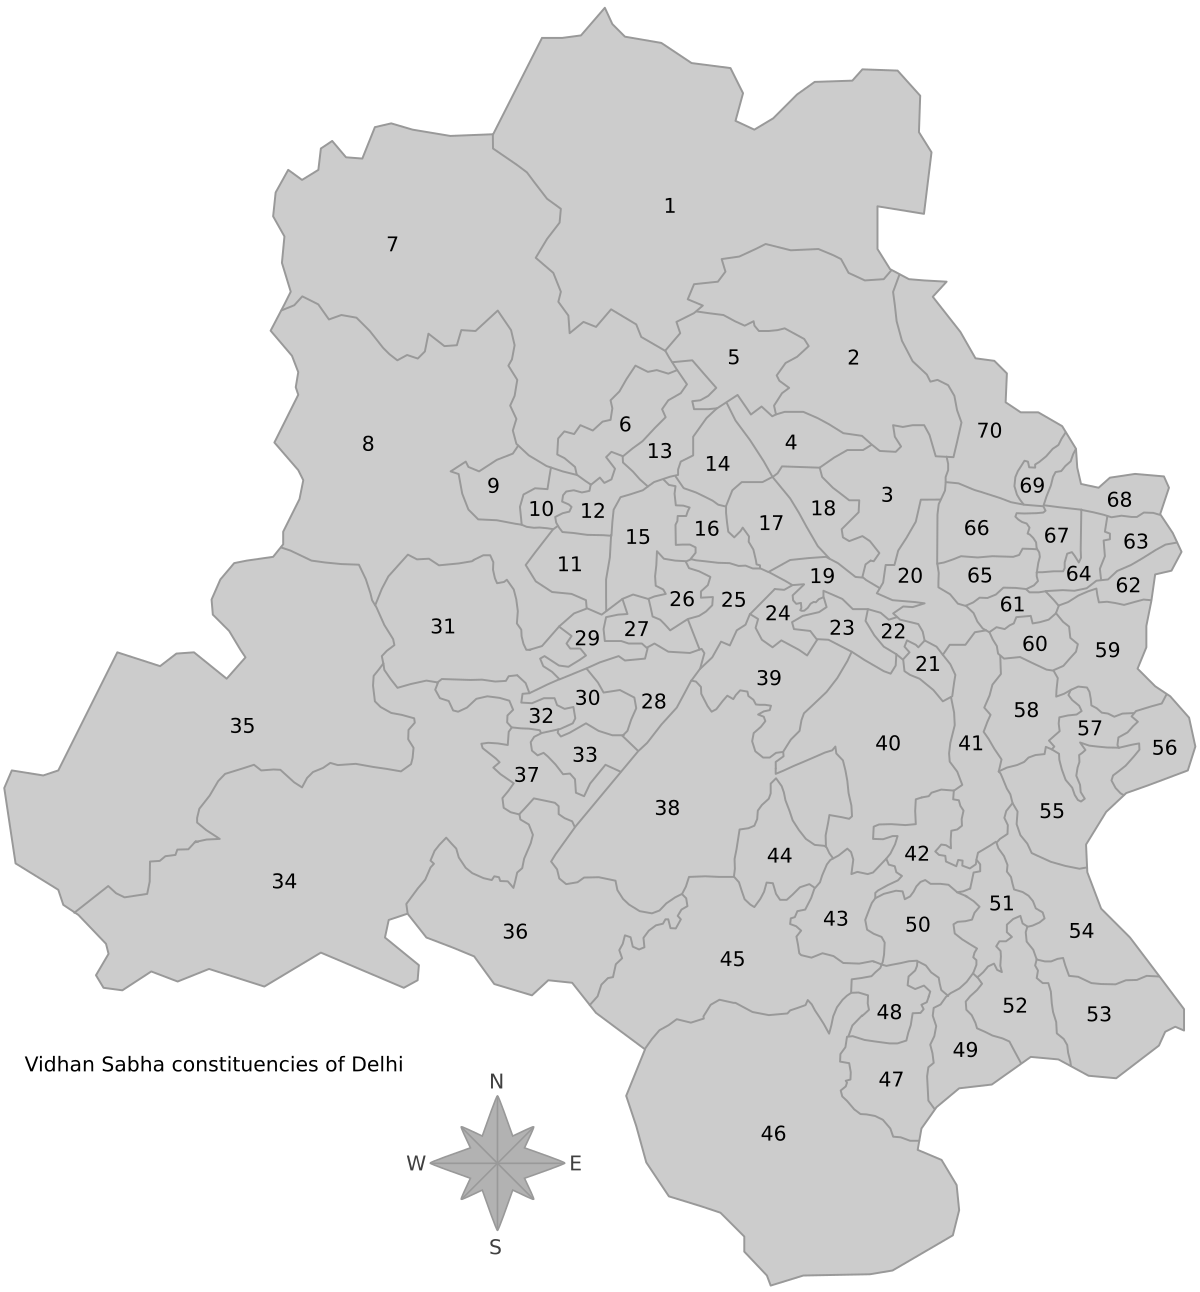 2020 Delhi Legislative Assembly election - Wikipedia